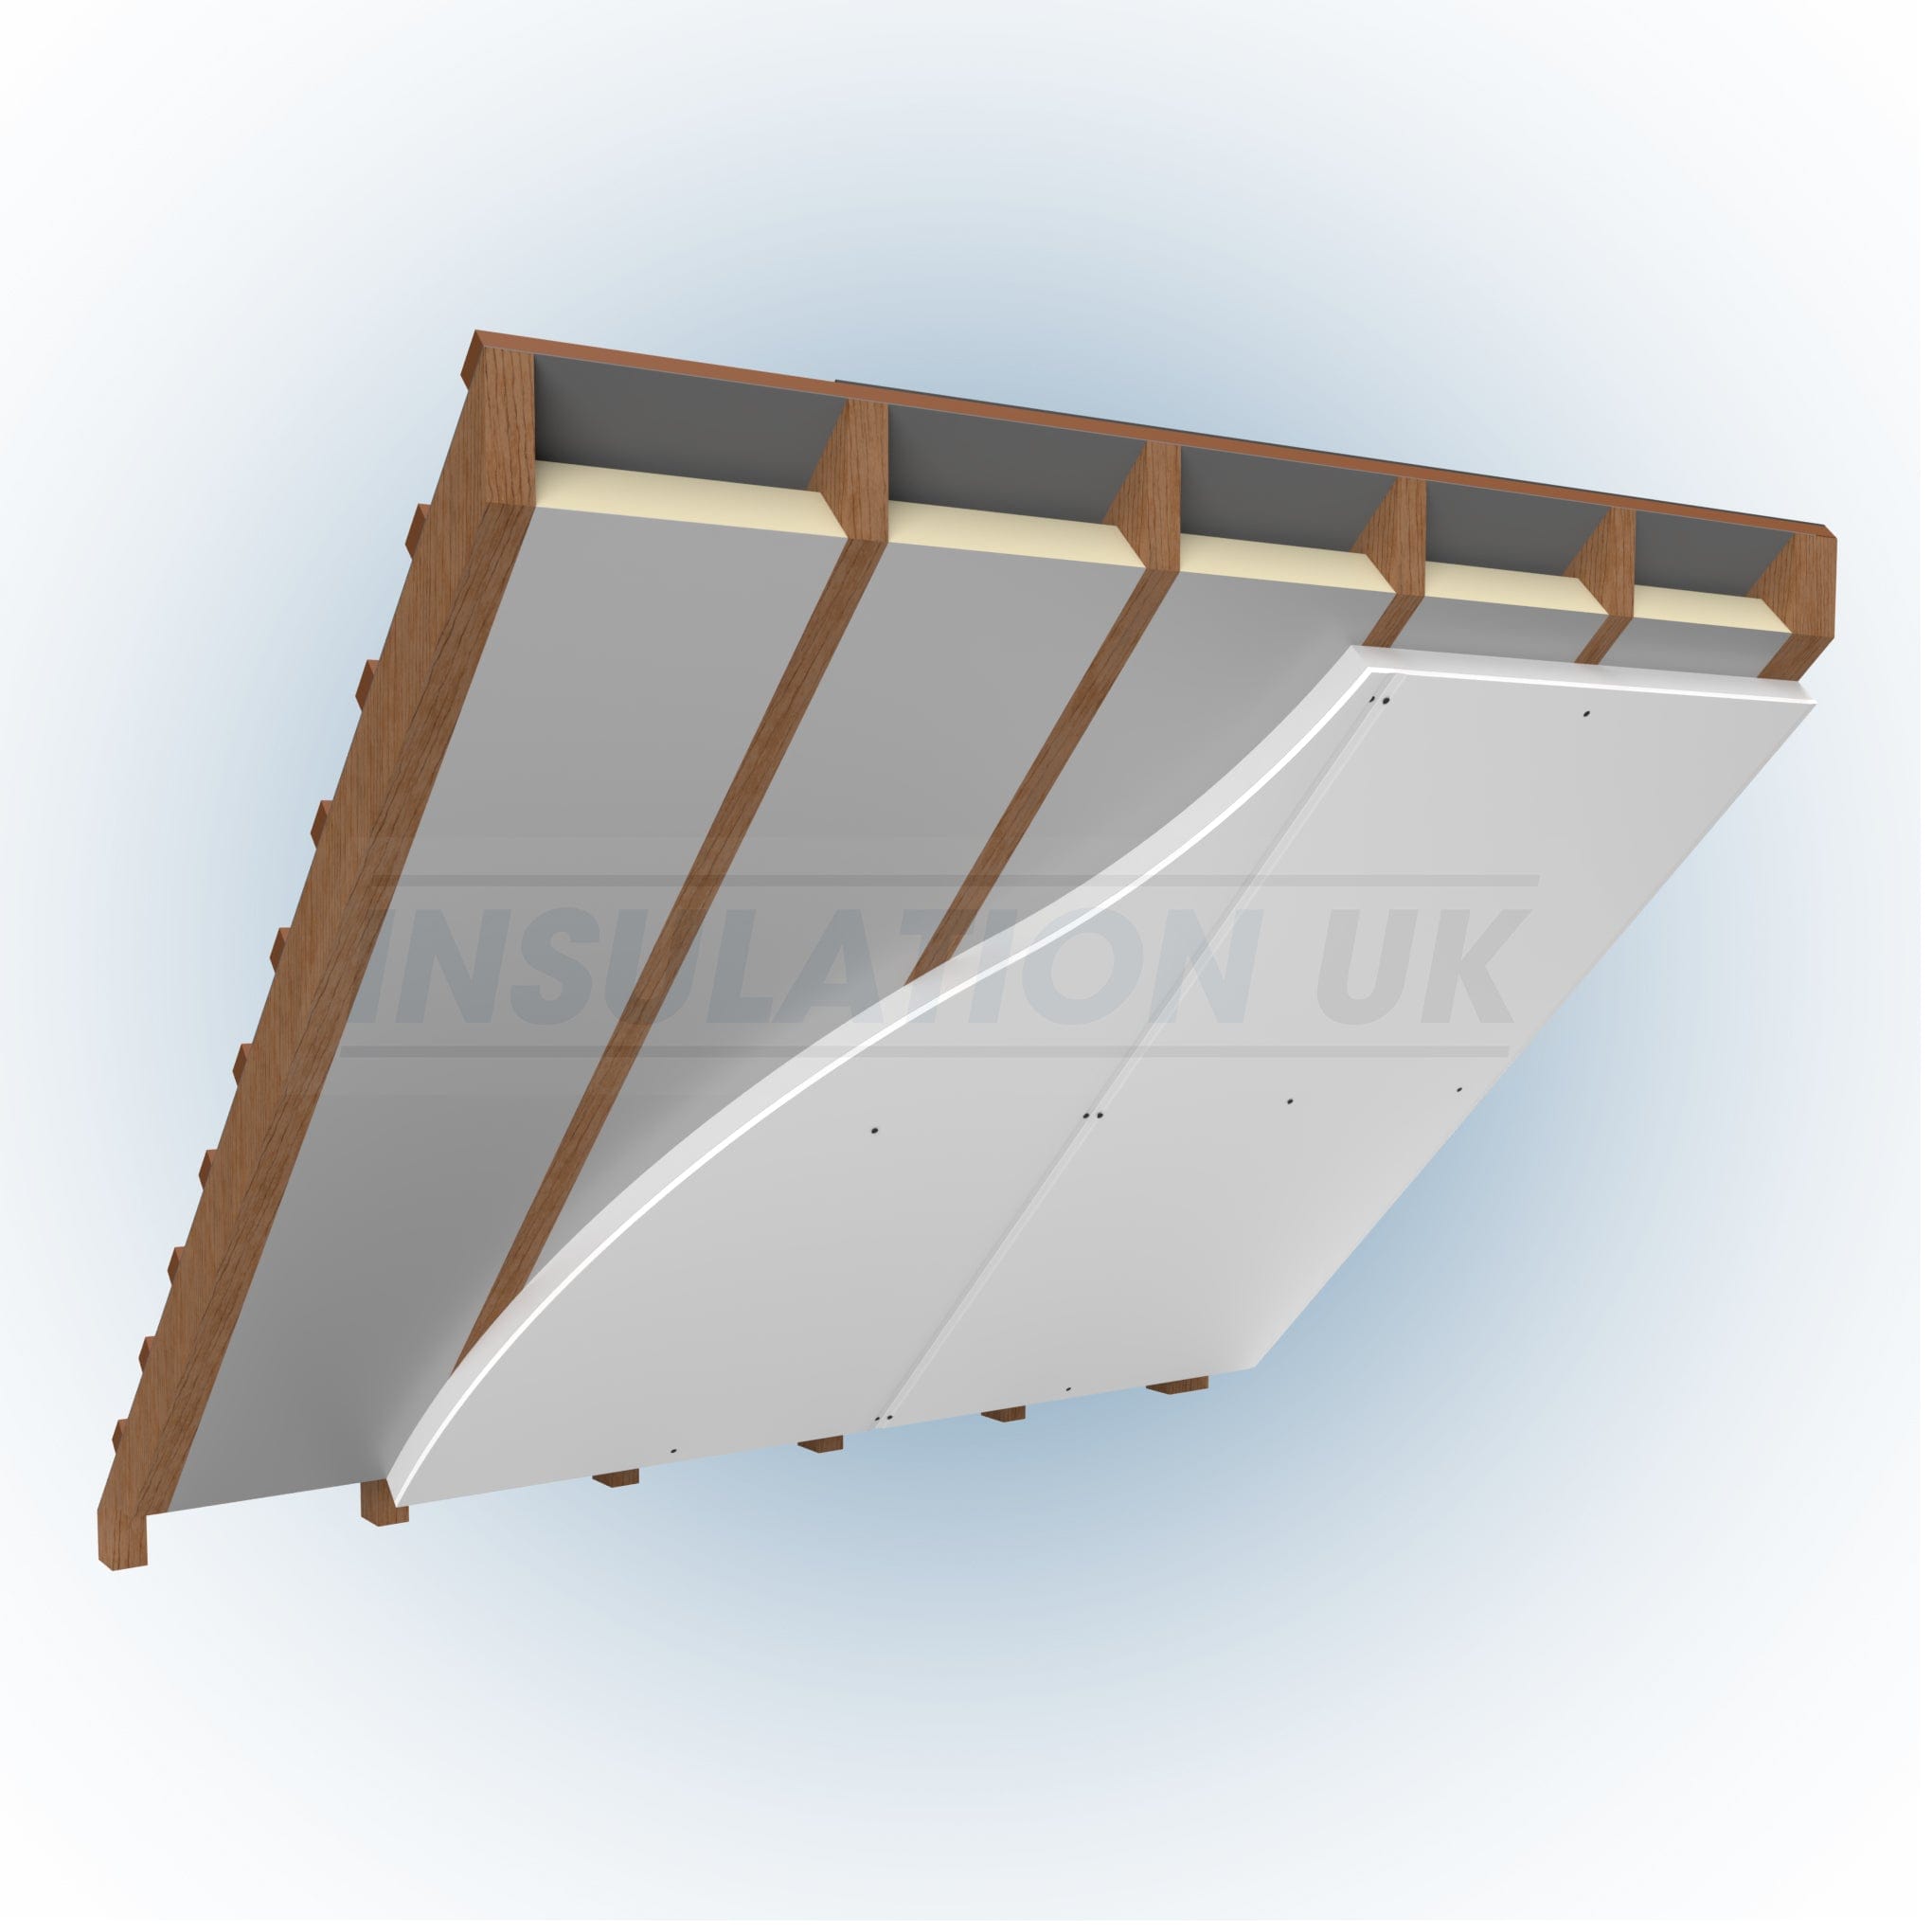 Tekwarm Insulation Tekwarm EPS Insulated Plasterboard | 2400mm x 1200mm